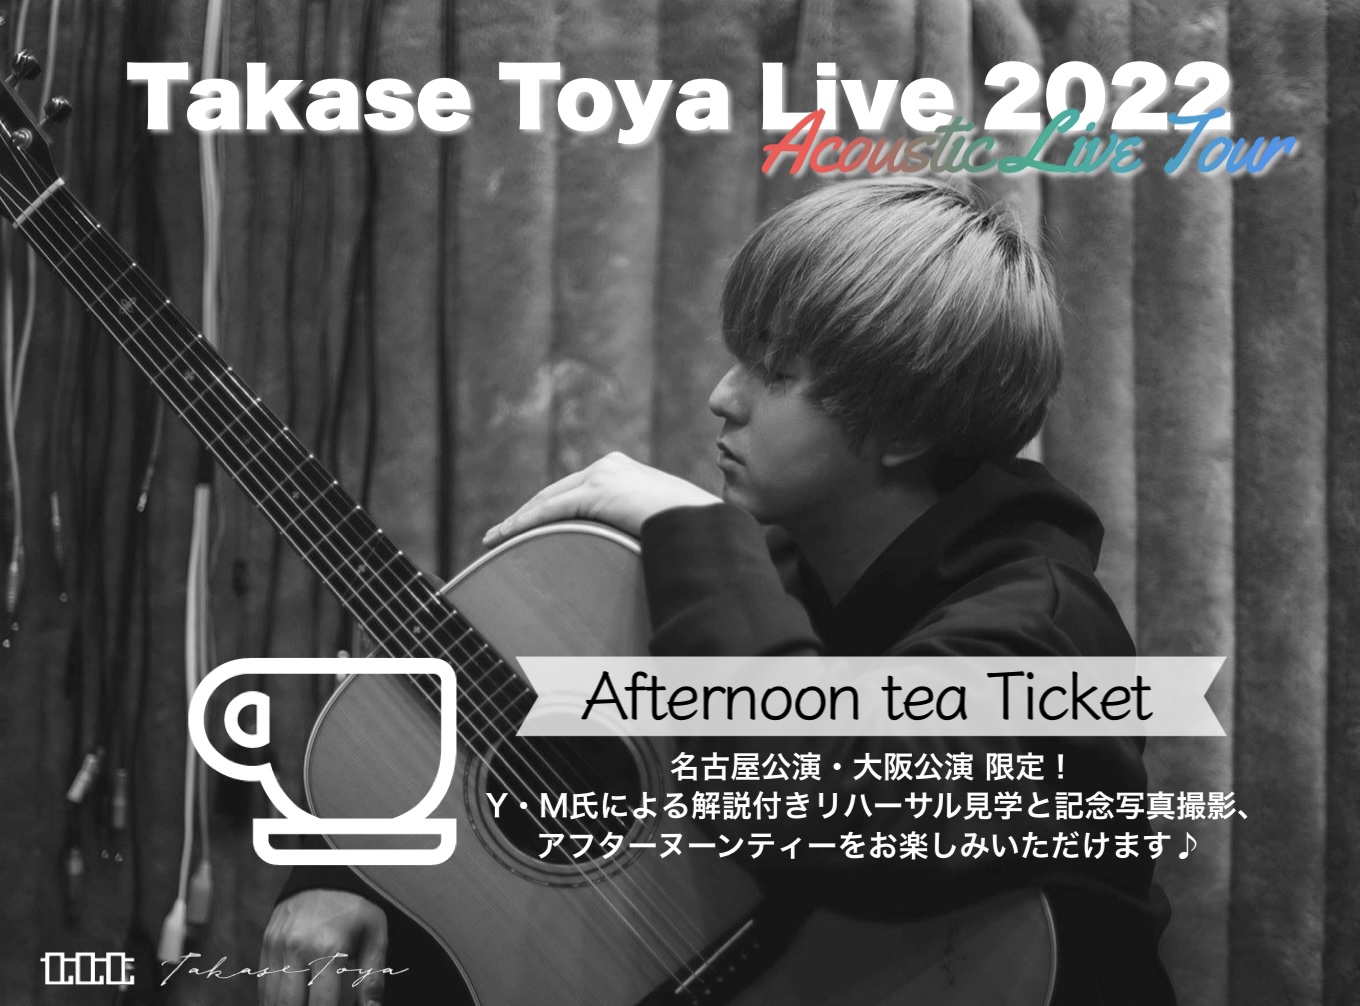 Takase Toya Live 2022【NAGOYA】Afternoon tea Ticket